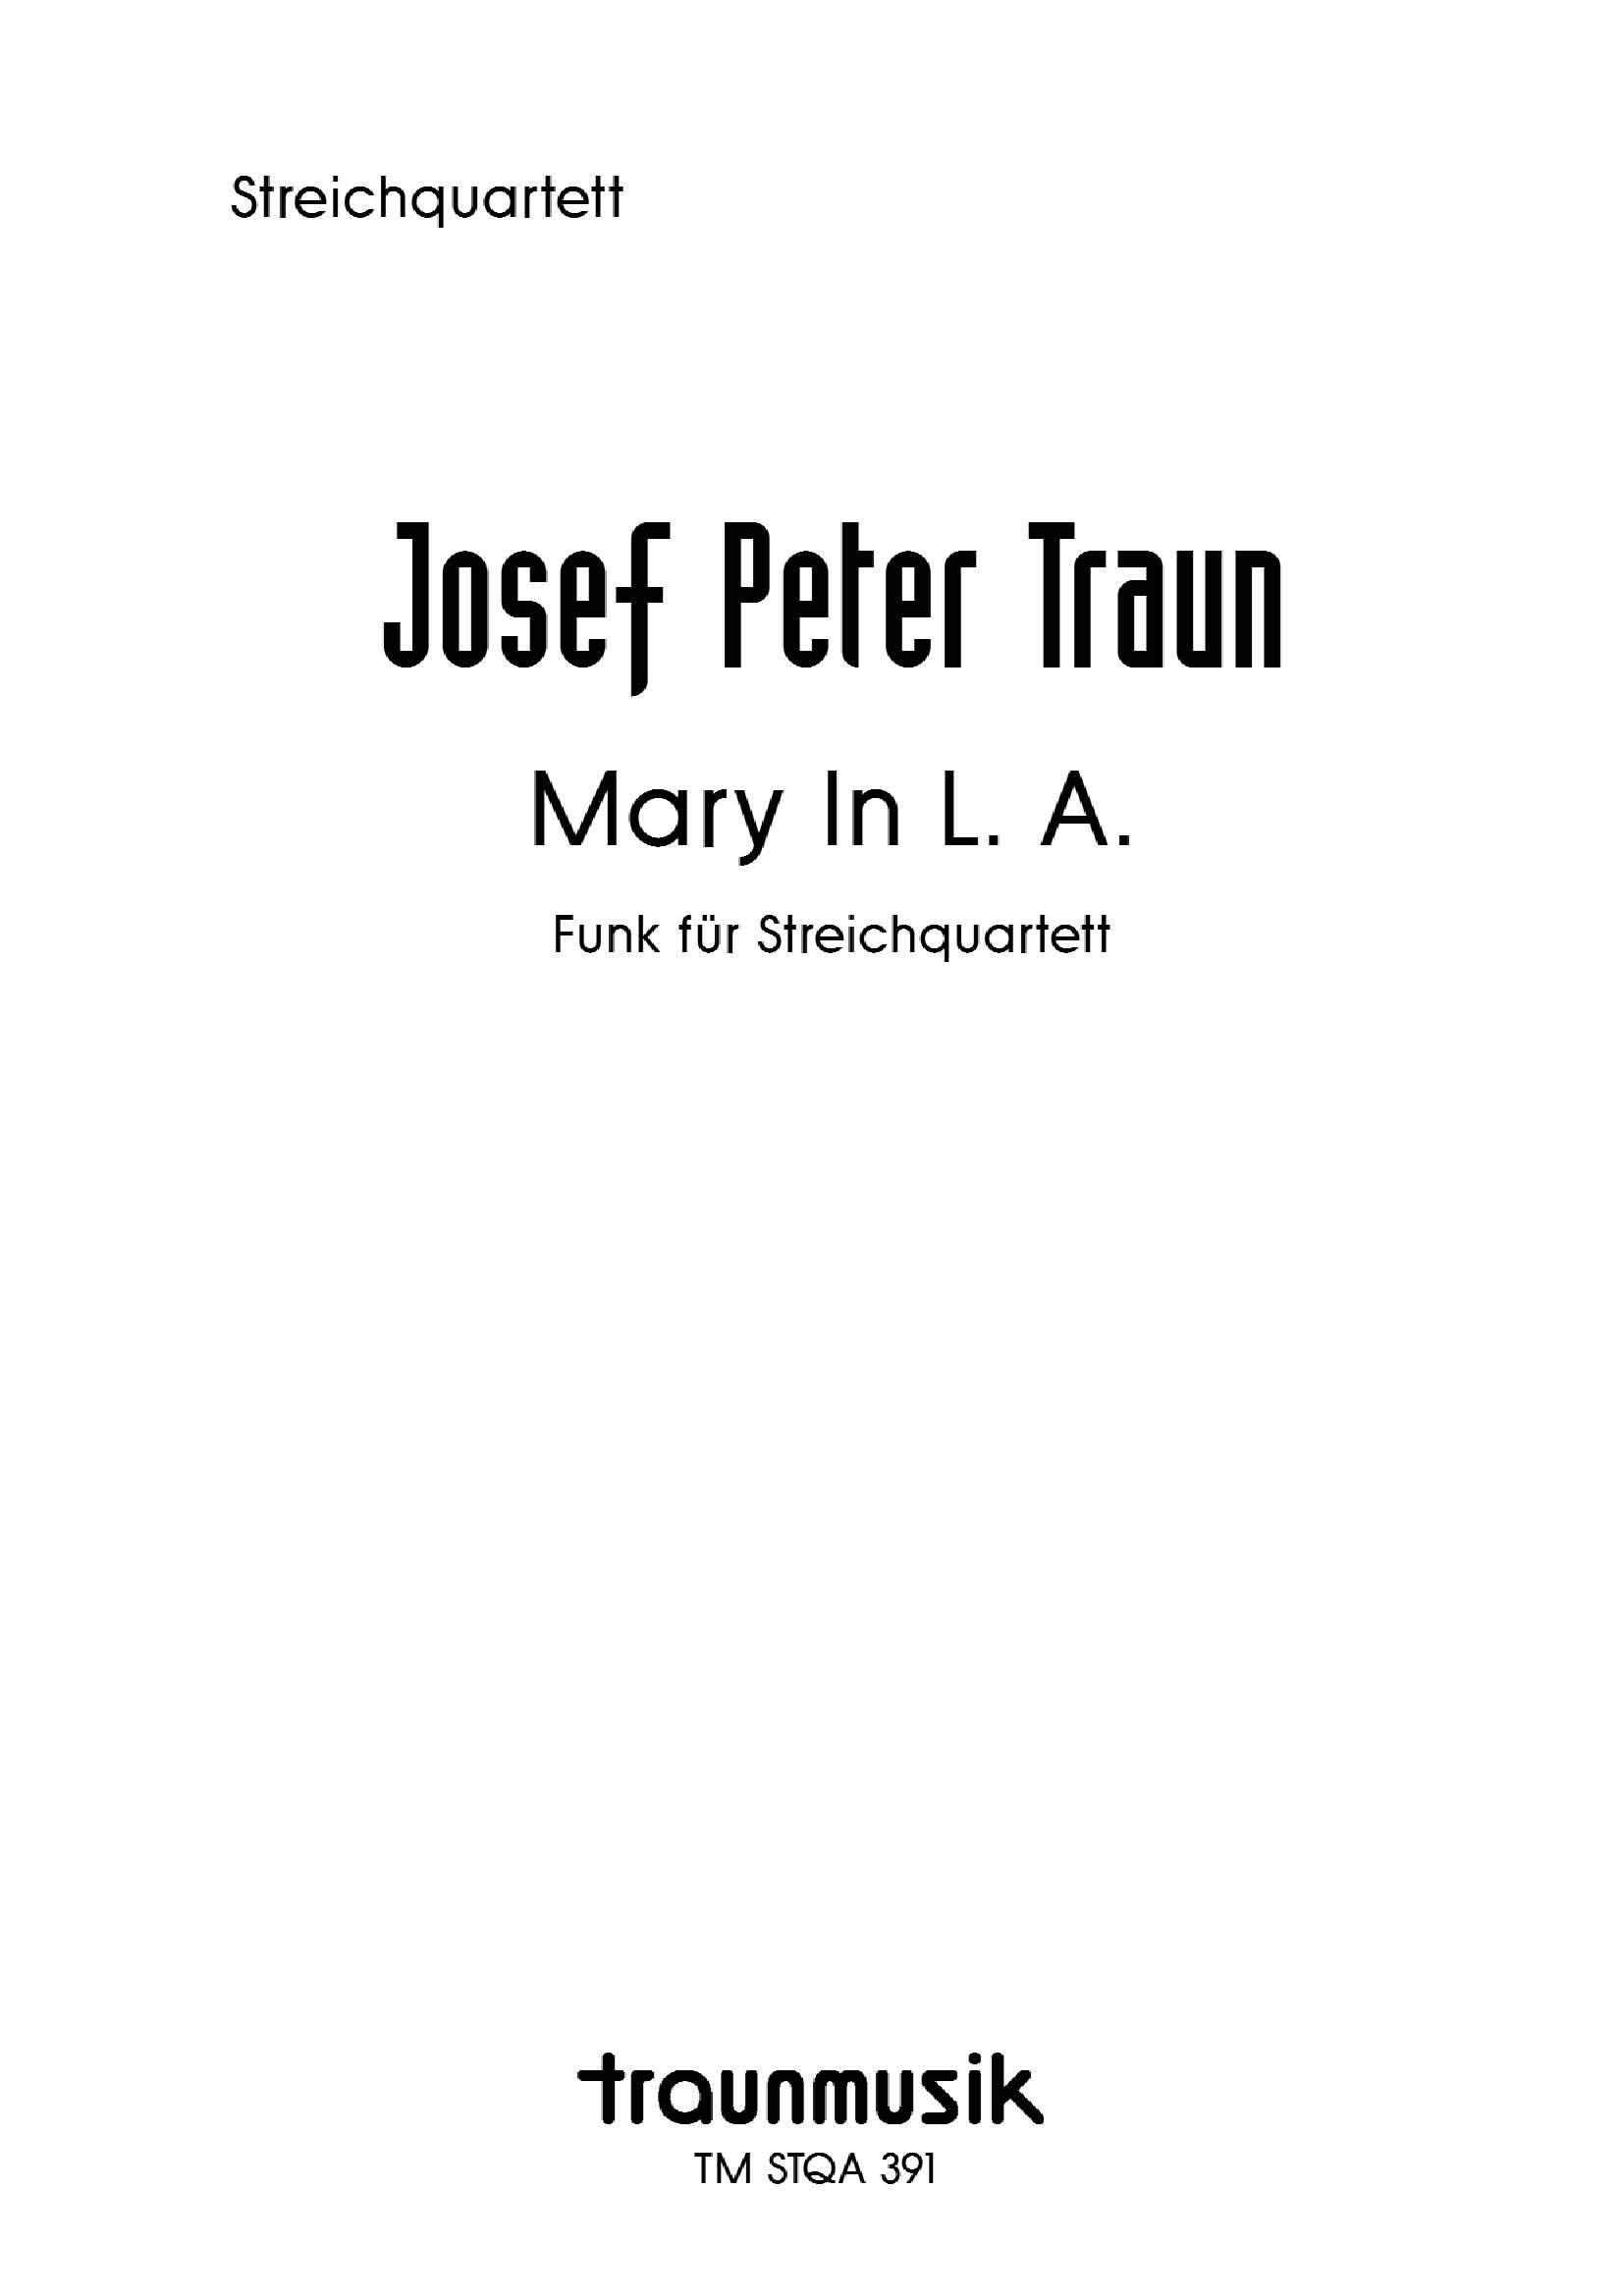 Mary in L.A. / Josef P. Traun